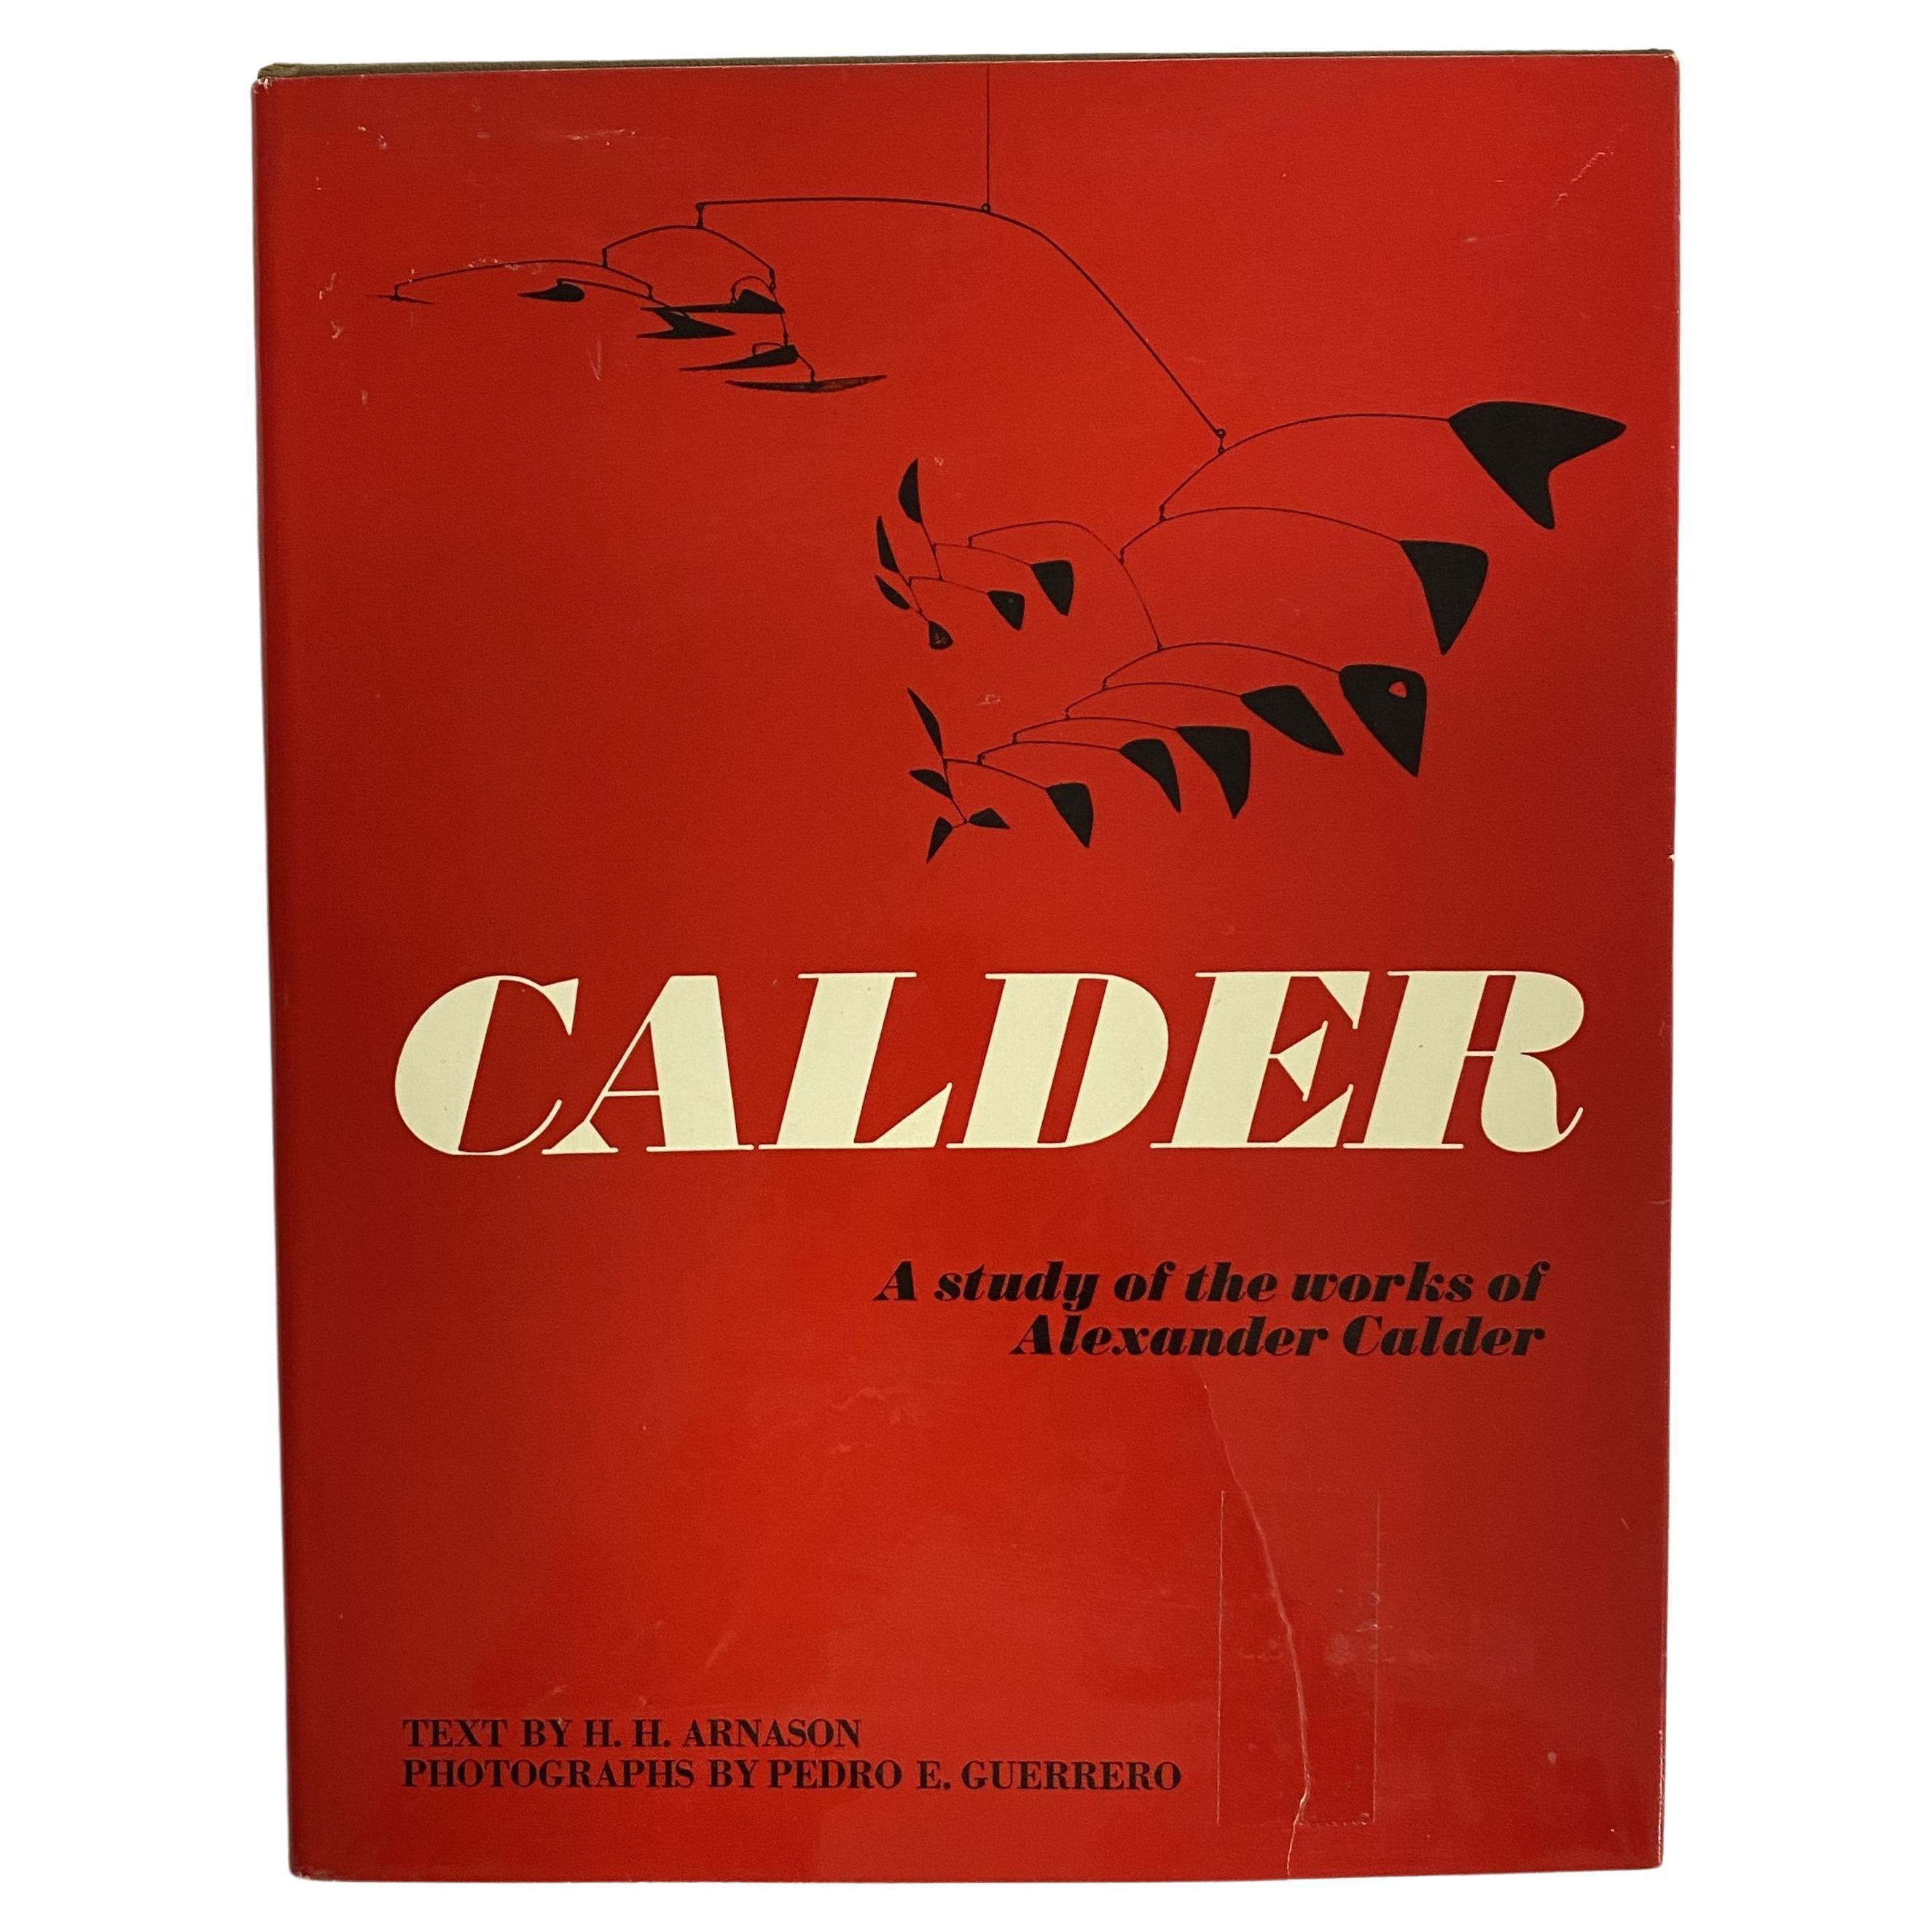 Calder: A Study of the Works of Alexander Calder by H. H. Arnason (Book)